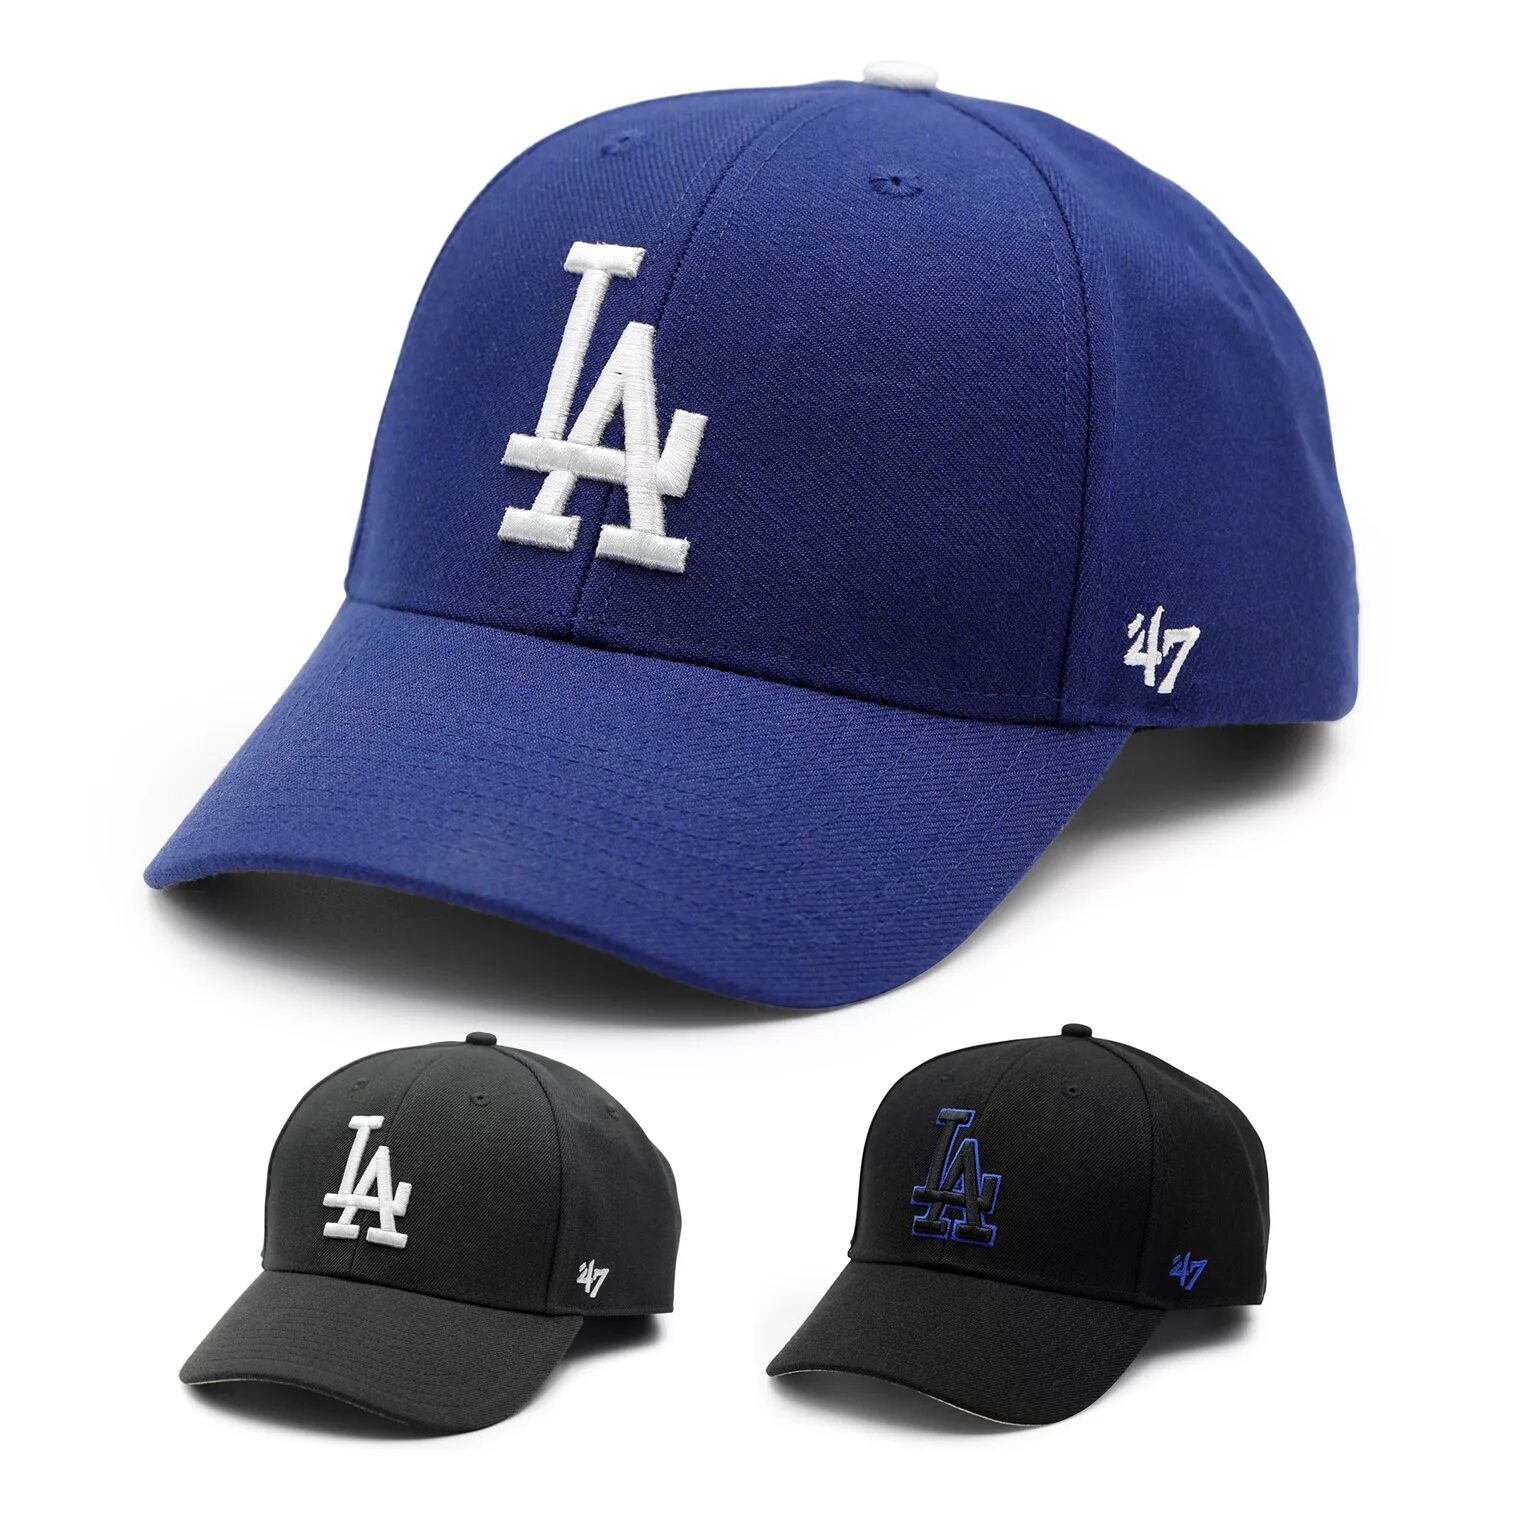 Dodgers cap. La Dodgers бейсболка. Los Angeles Dodgers cap. La Dodgers бейсболка adidas.